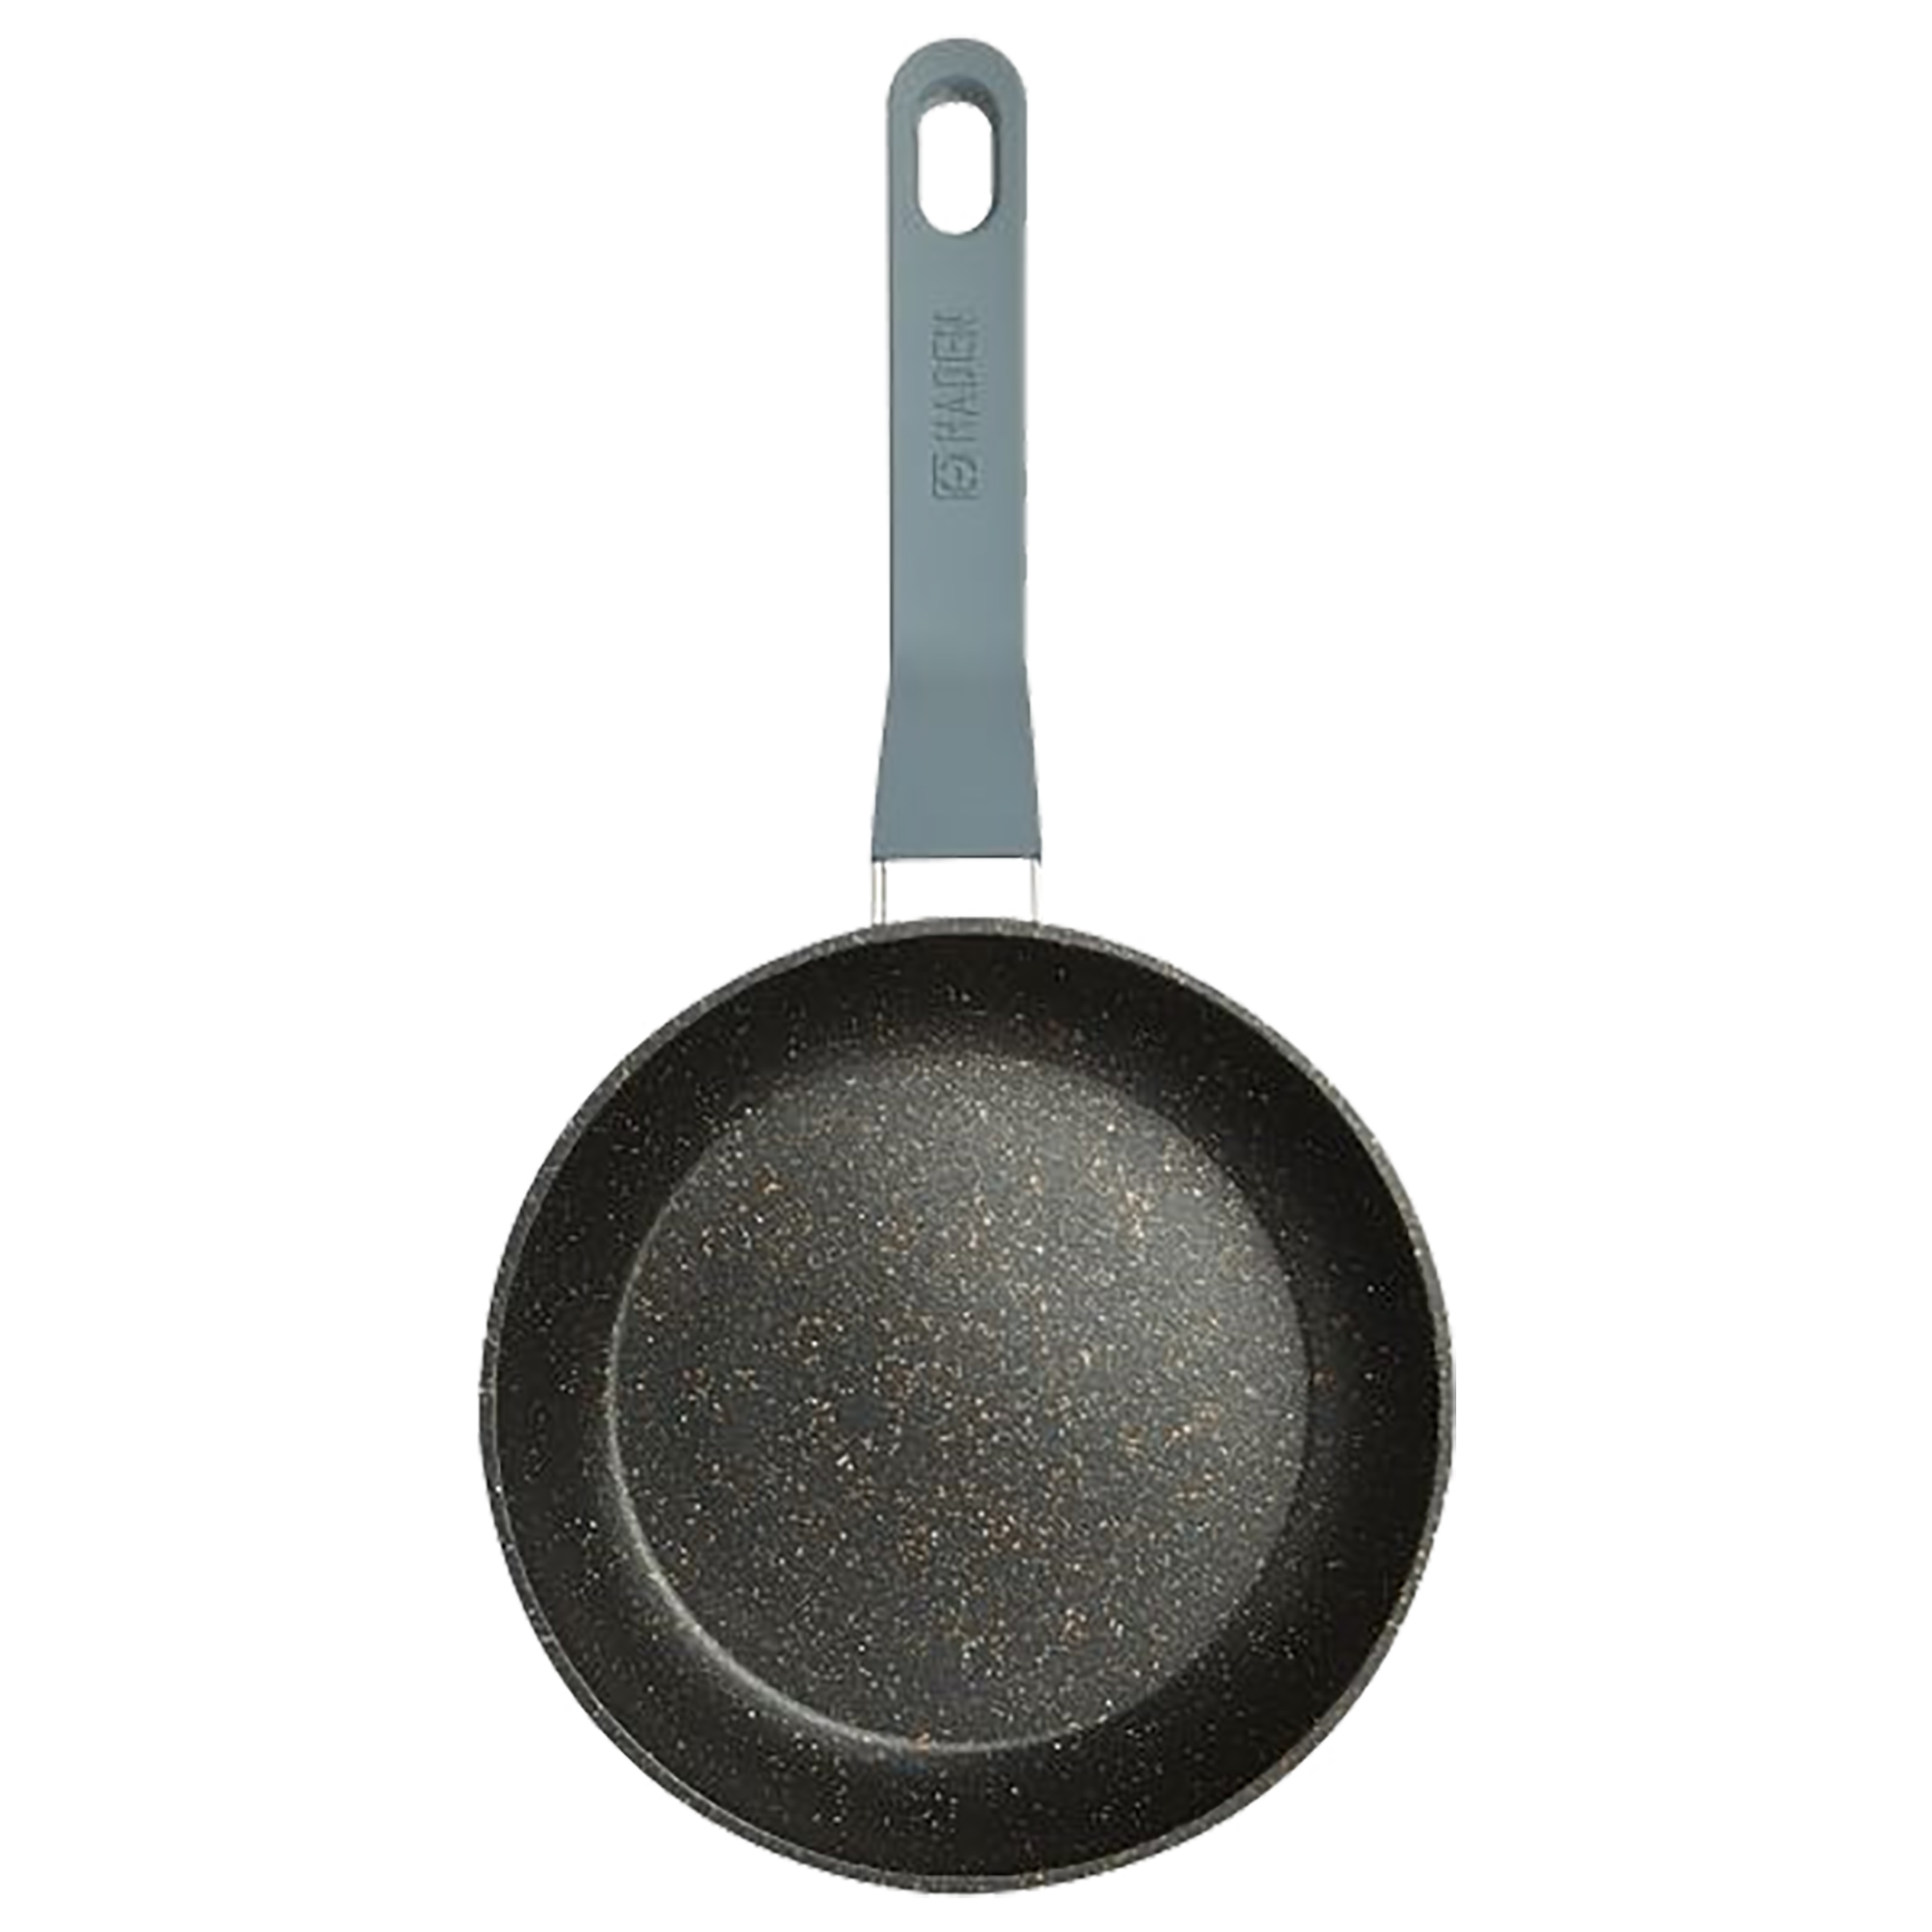 Sabichi Haden Pan (Cook & Clean Pans Easily, 197757, Black)